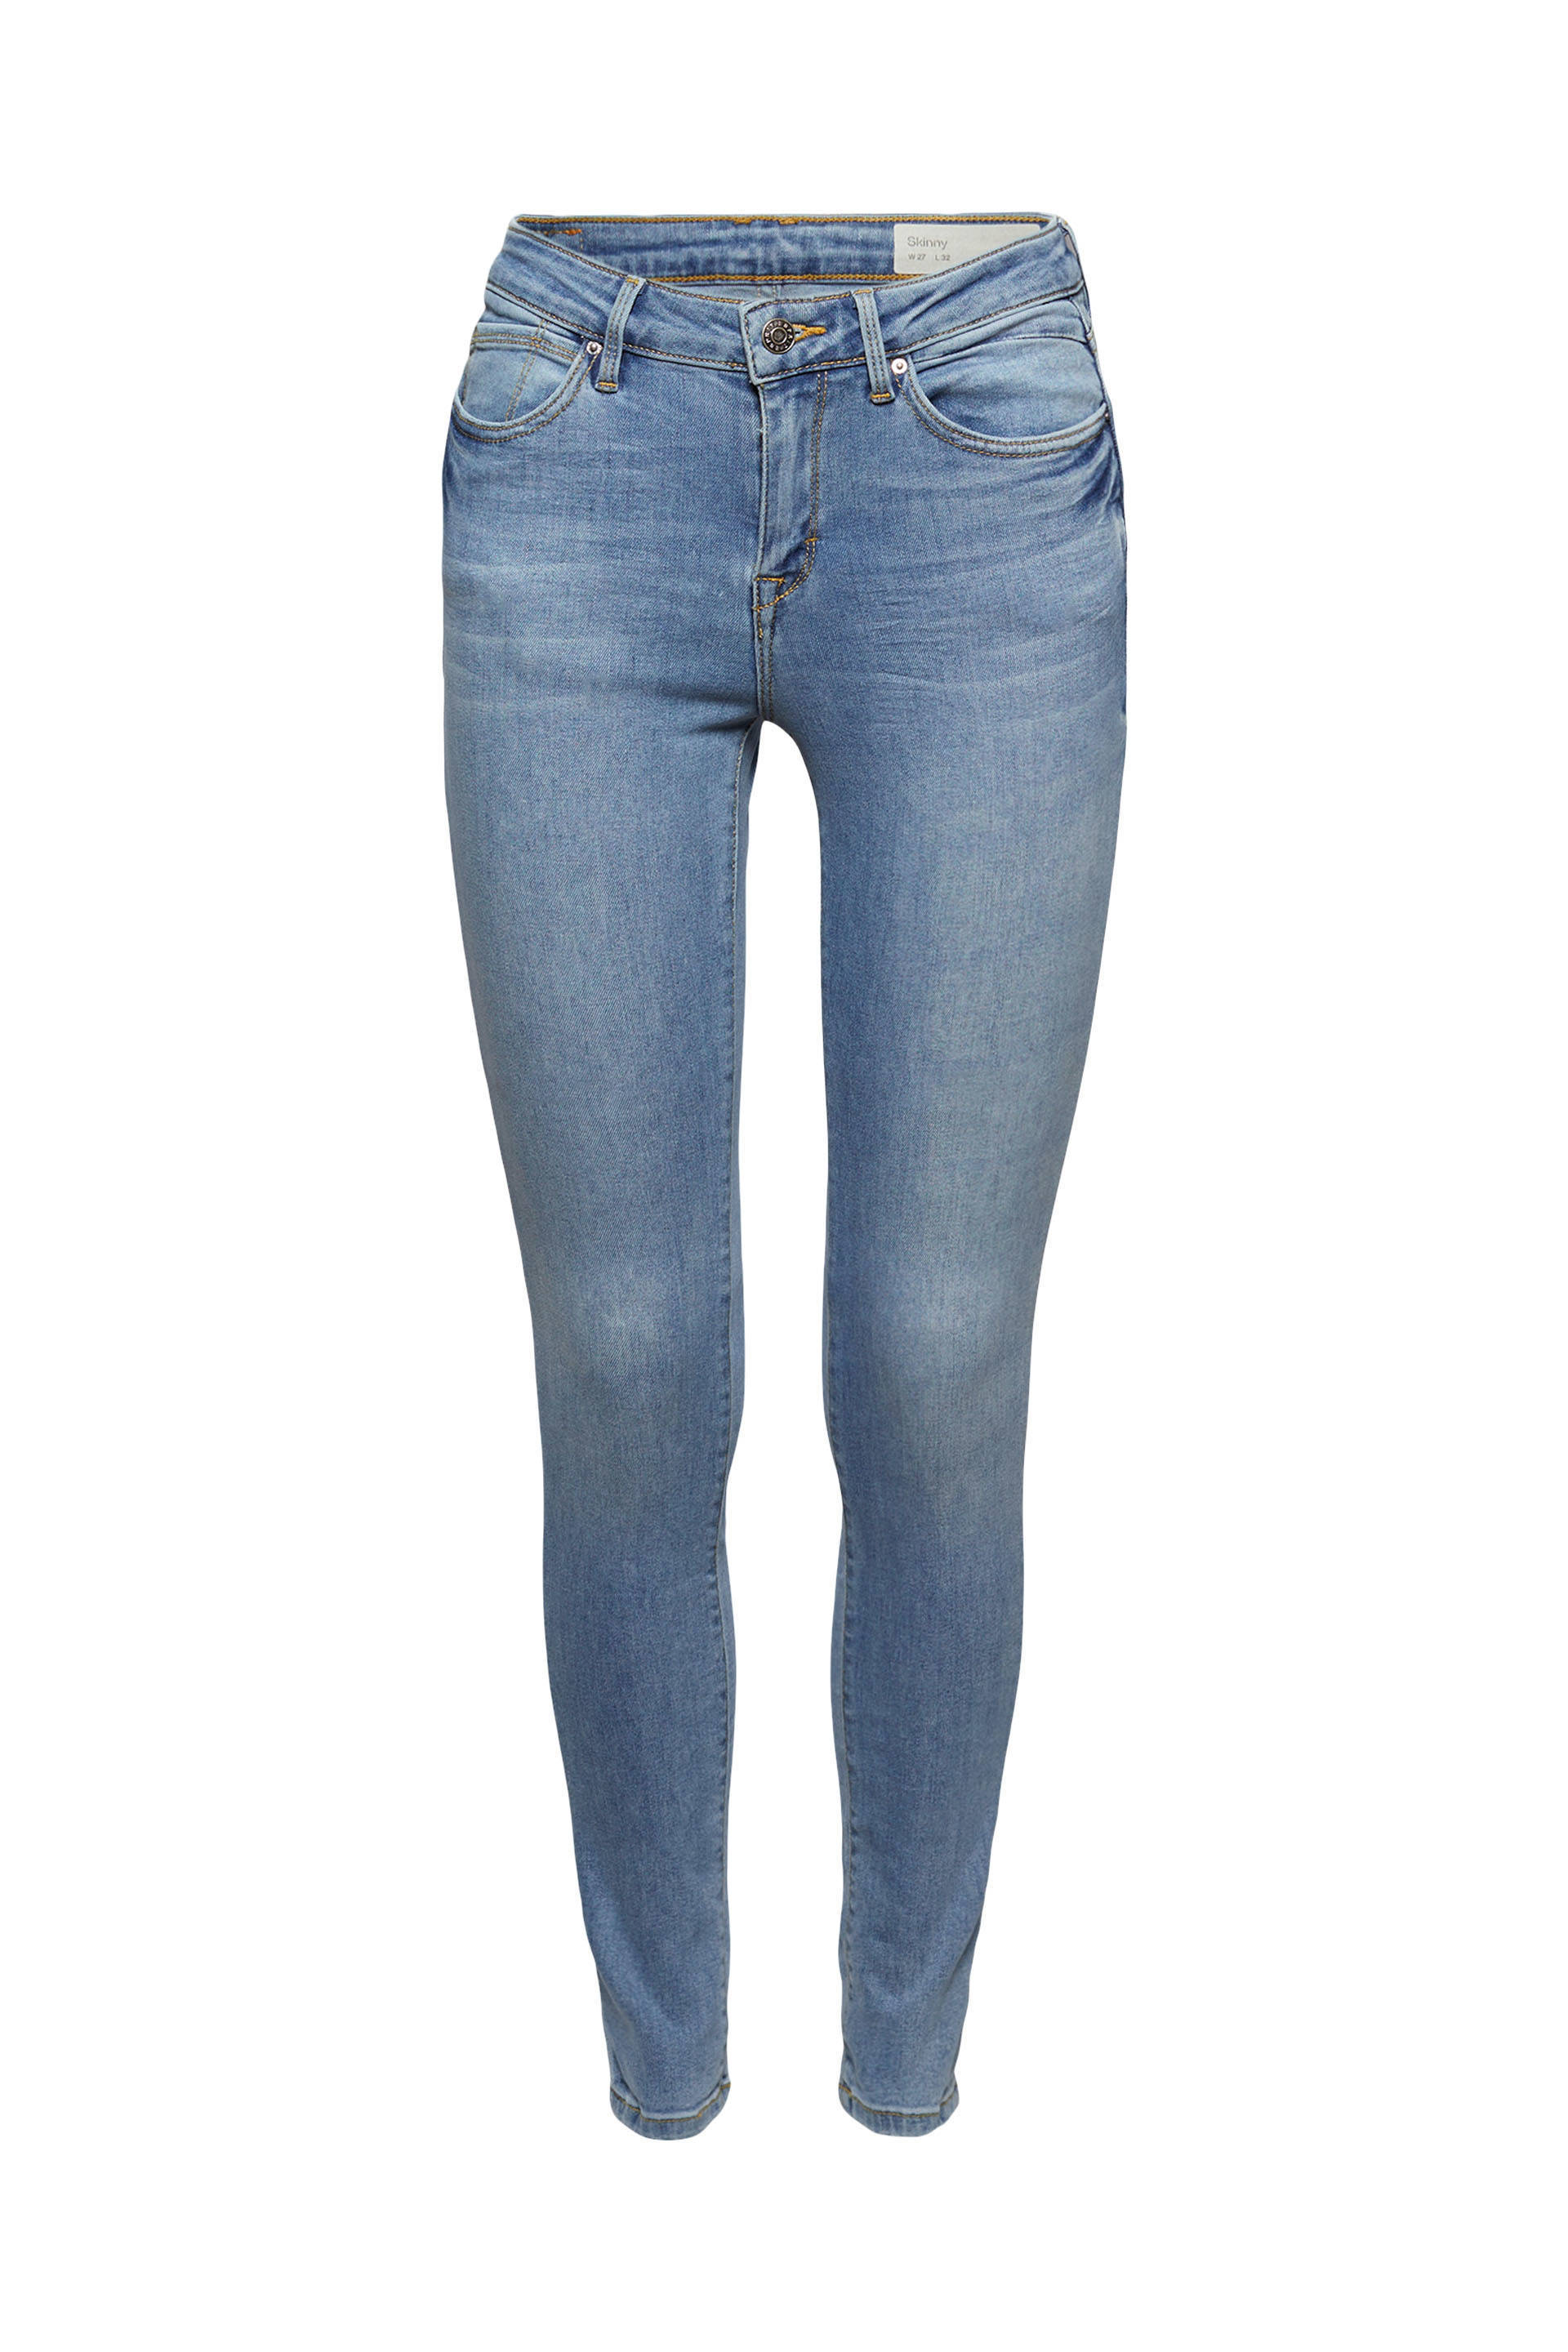 ESPRIT Women Casual skinny jeans light blue denim online kopen